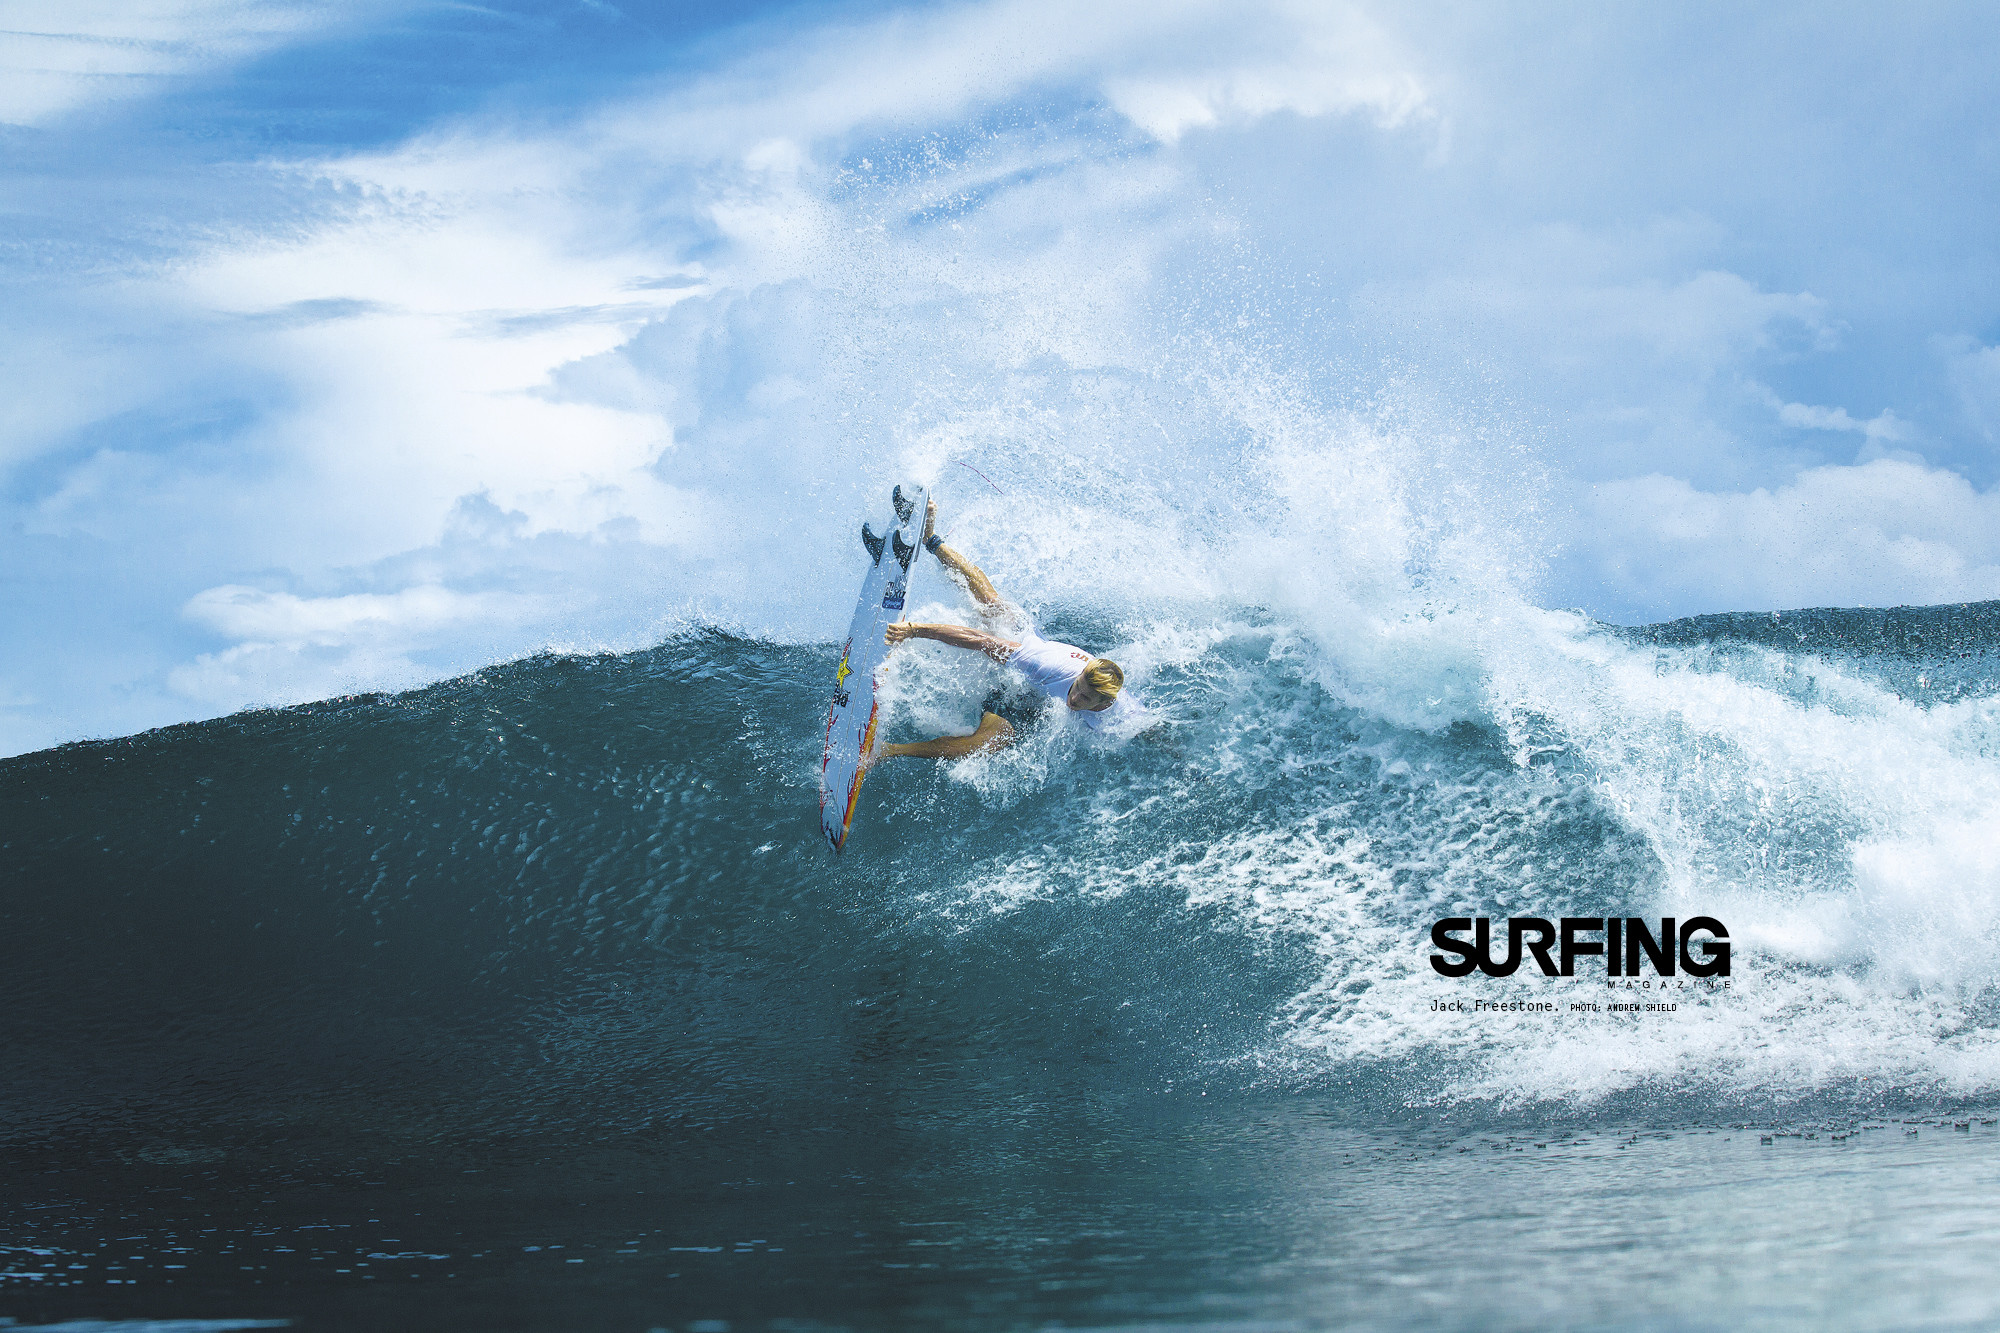 Jack Freestone Photo - Owen Wright Surfing Background - HD Wallpaper 